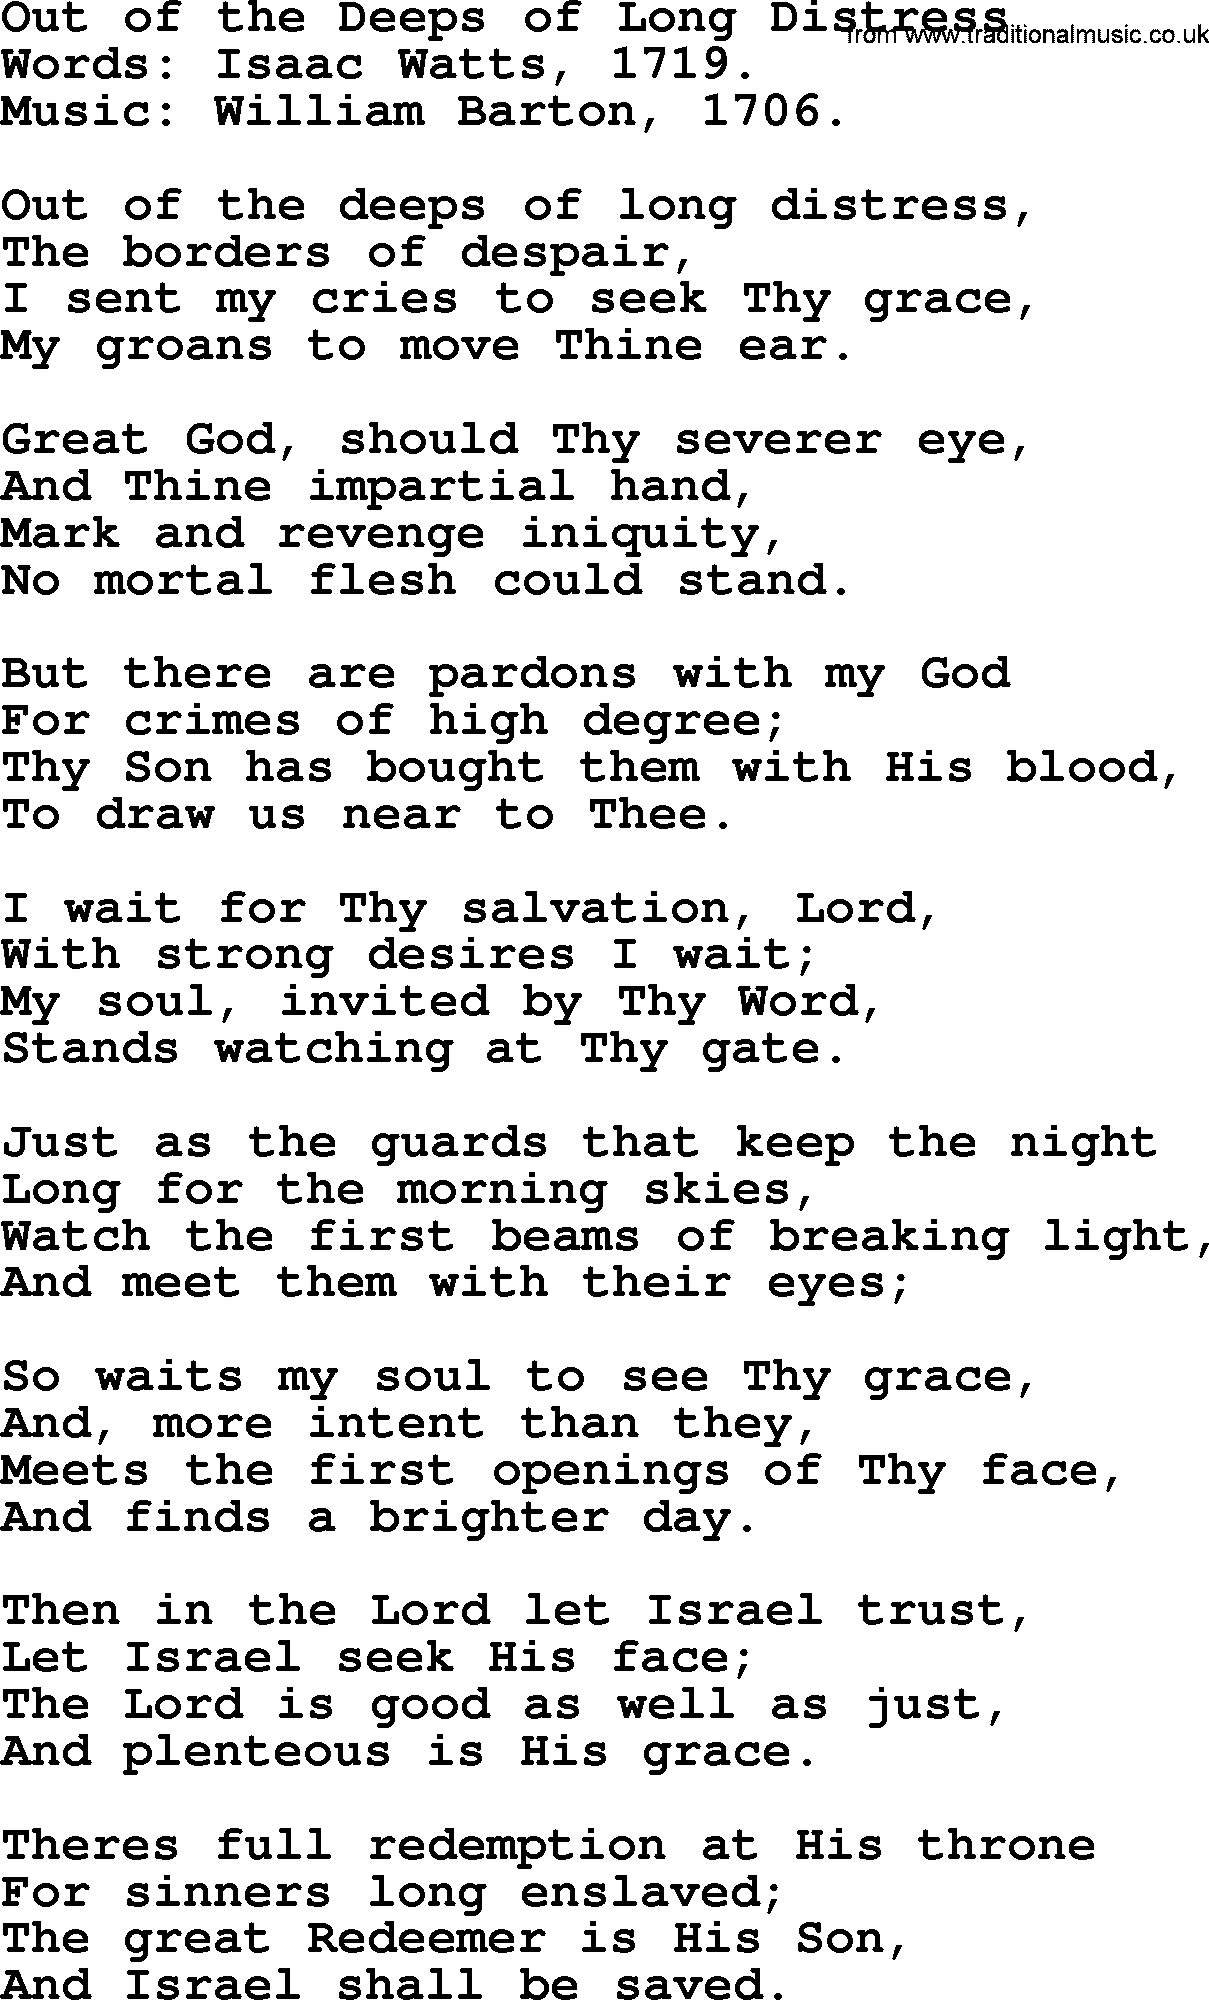 Isaac Watts Christian hymn: Out of the Deeps of Long Distress- lyricss